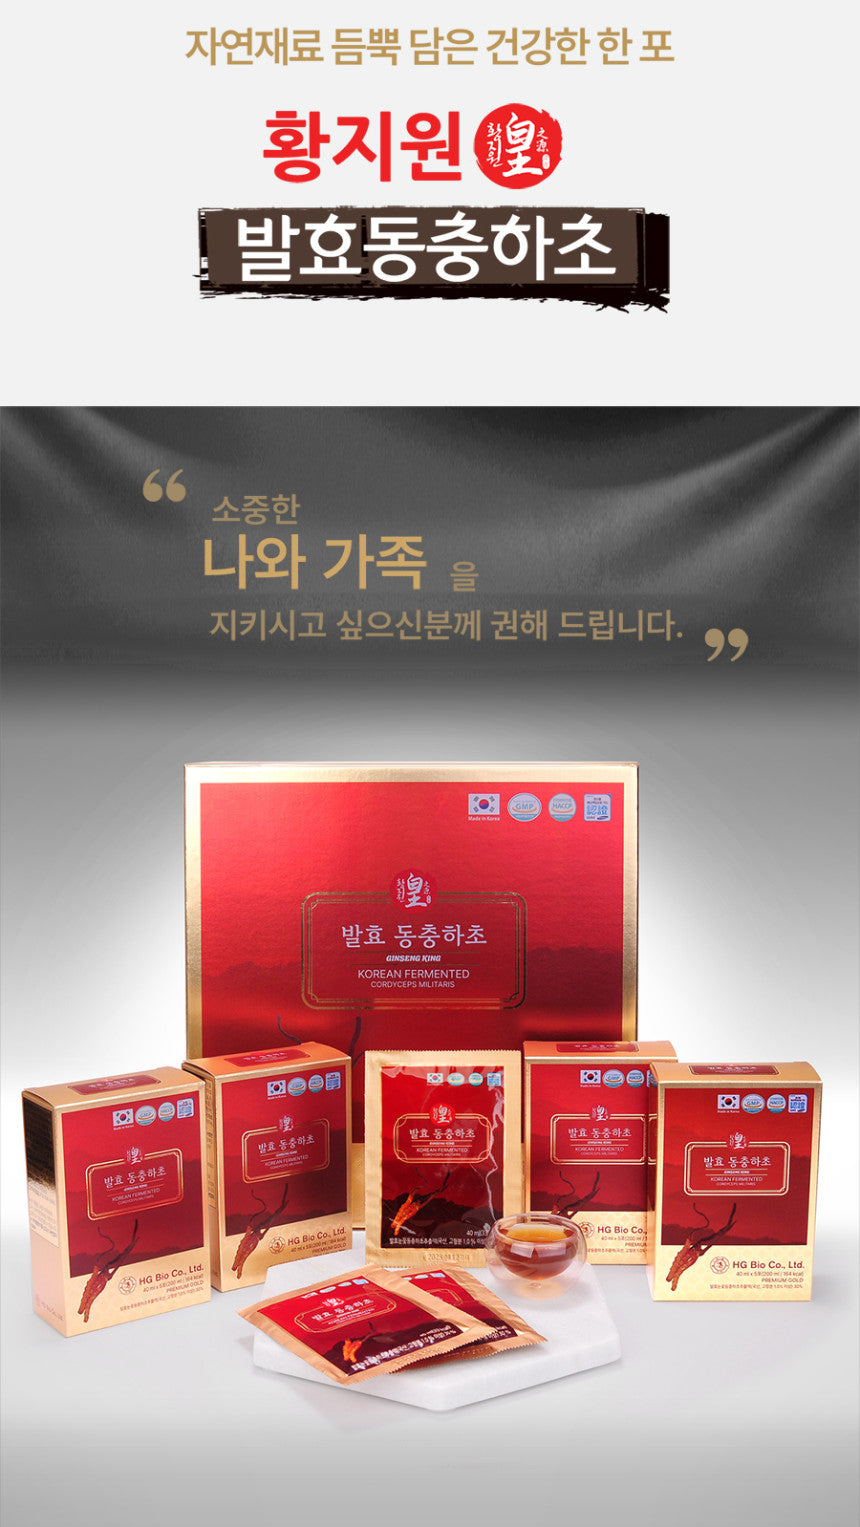 Hwang Ji Won Korean Permented CORDYCEPS MILITARIS 40ml 30 Pouches Drinks Premium Gold Health Supplements